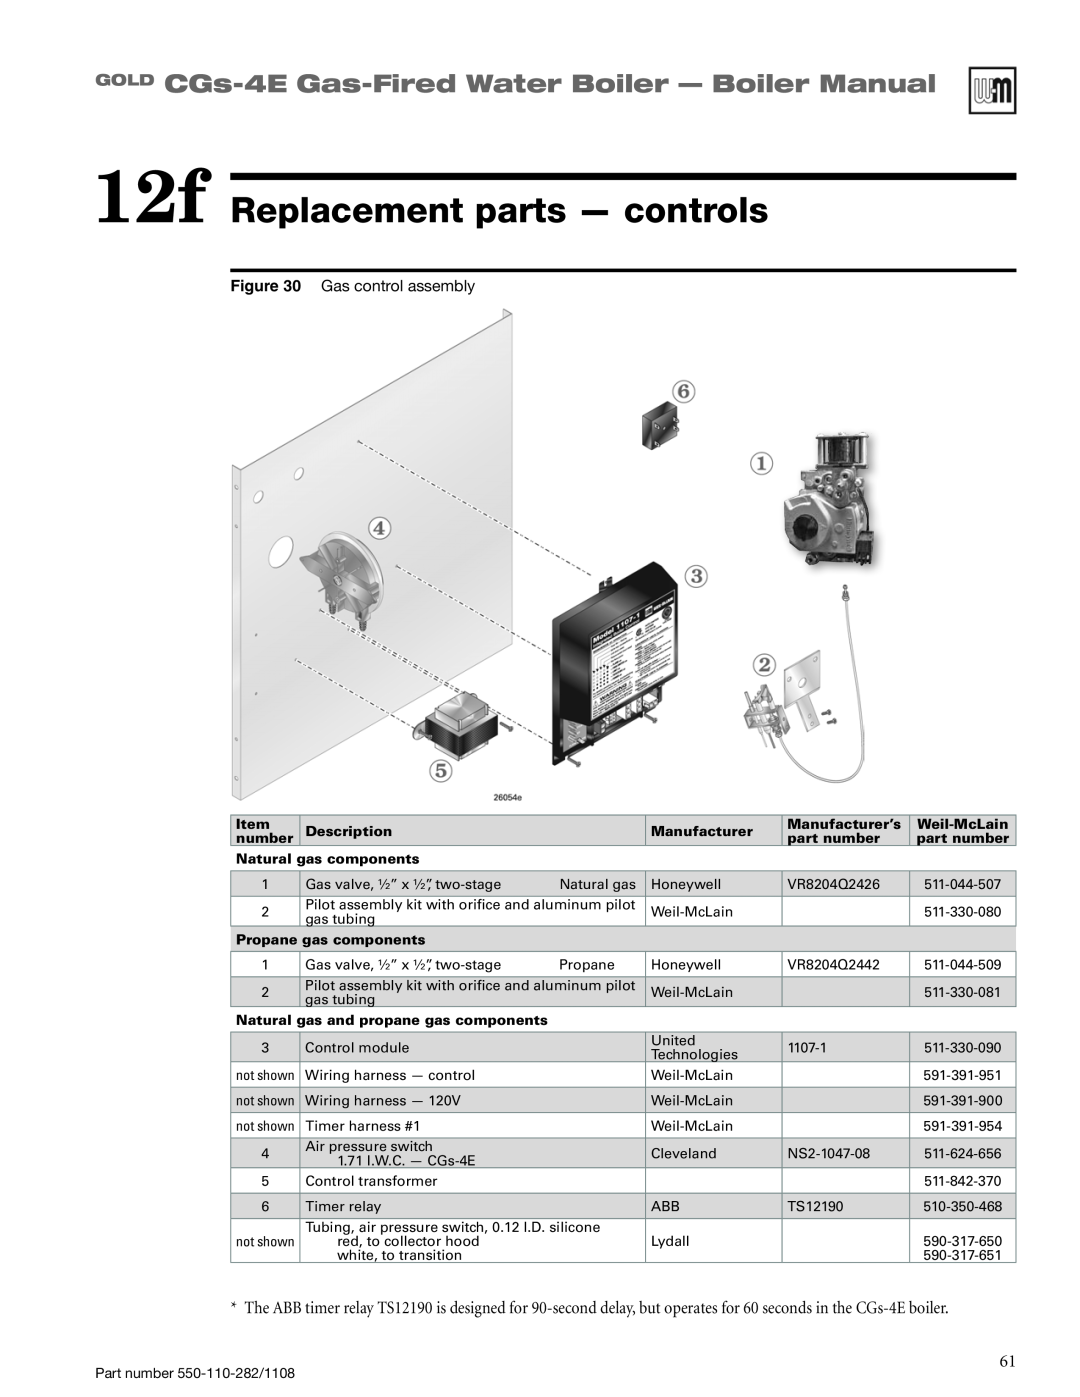 Weil-McLain CGS-4E manual 12f Replacement parts - controls, GOLD CGs-4E Gas-FiredWater Boiler - Boiler Manual 